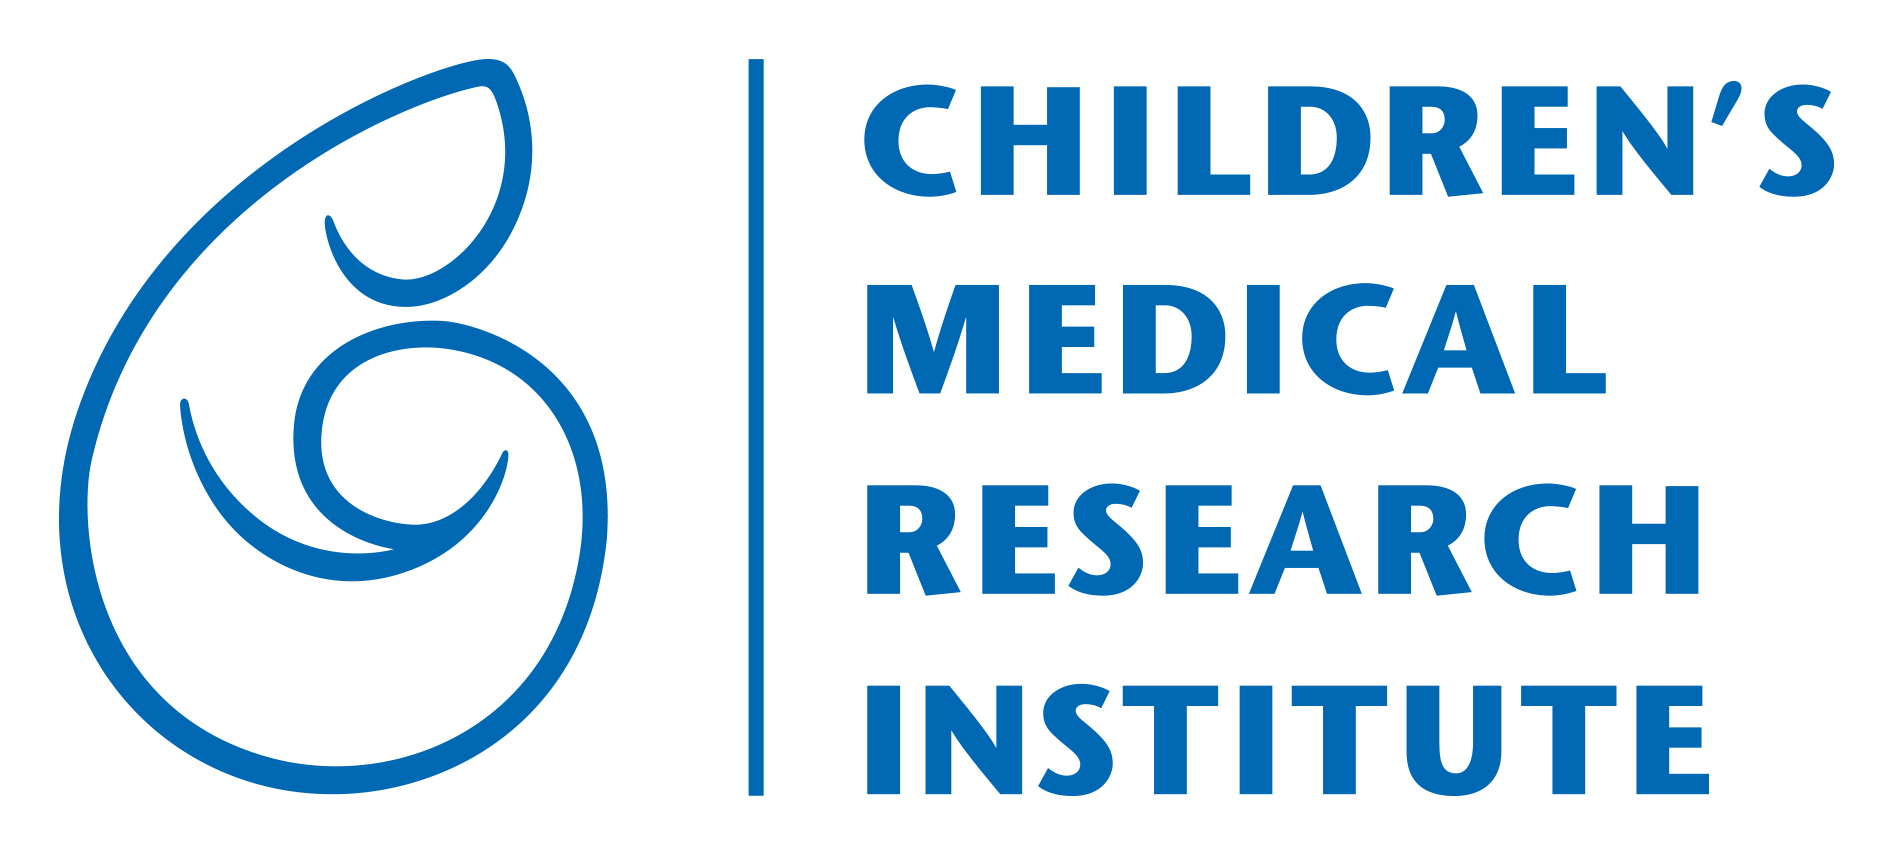 Children's Medical Research Institute logo